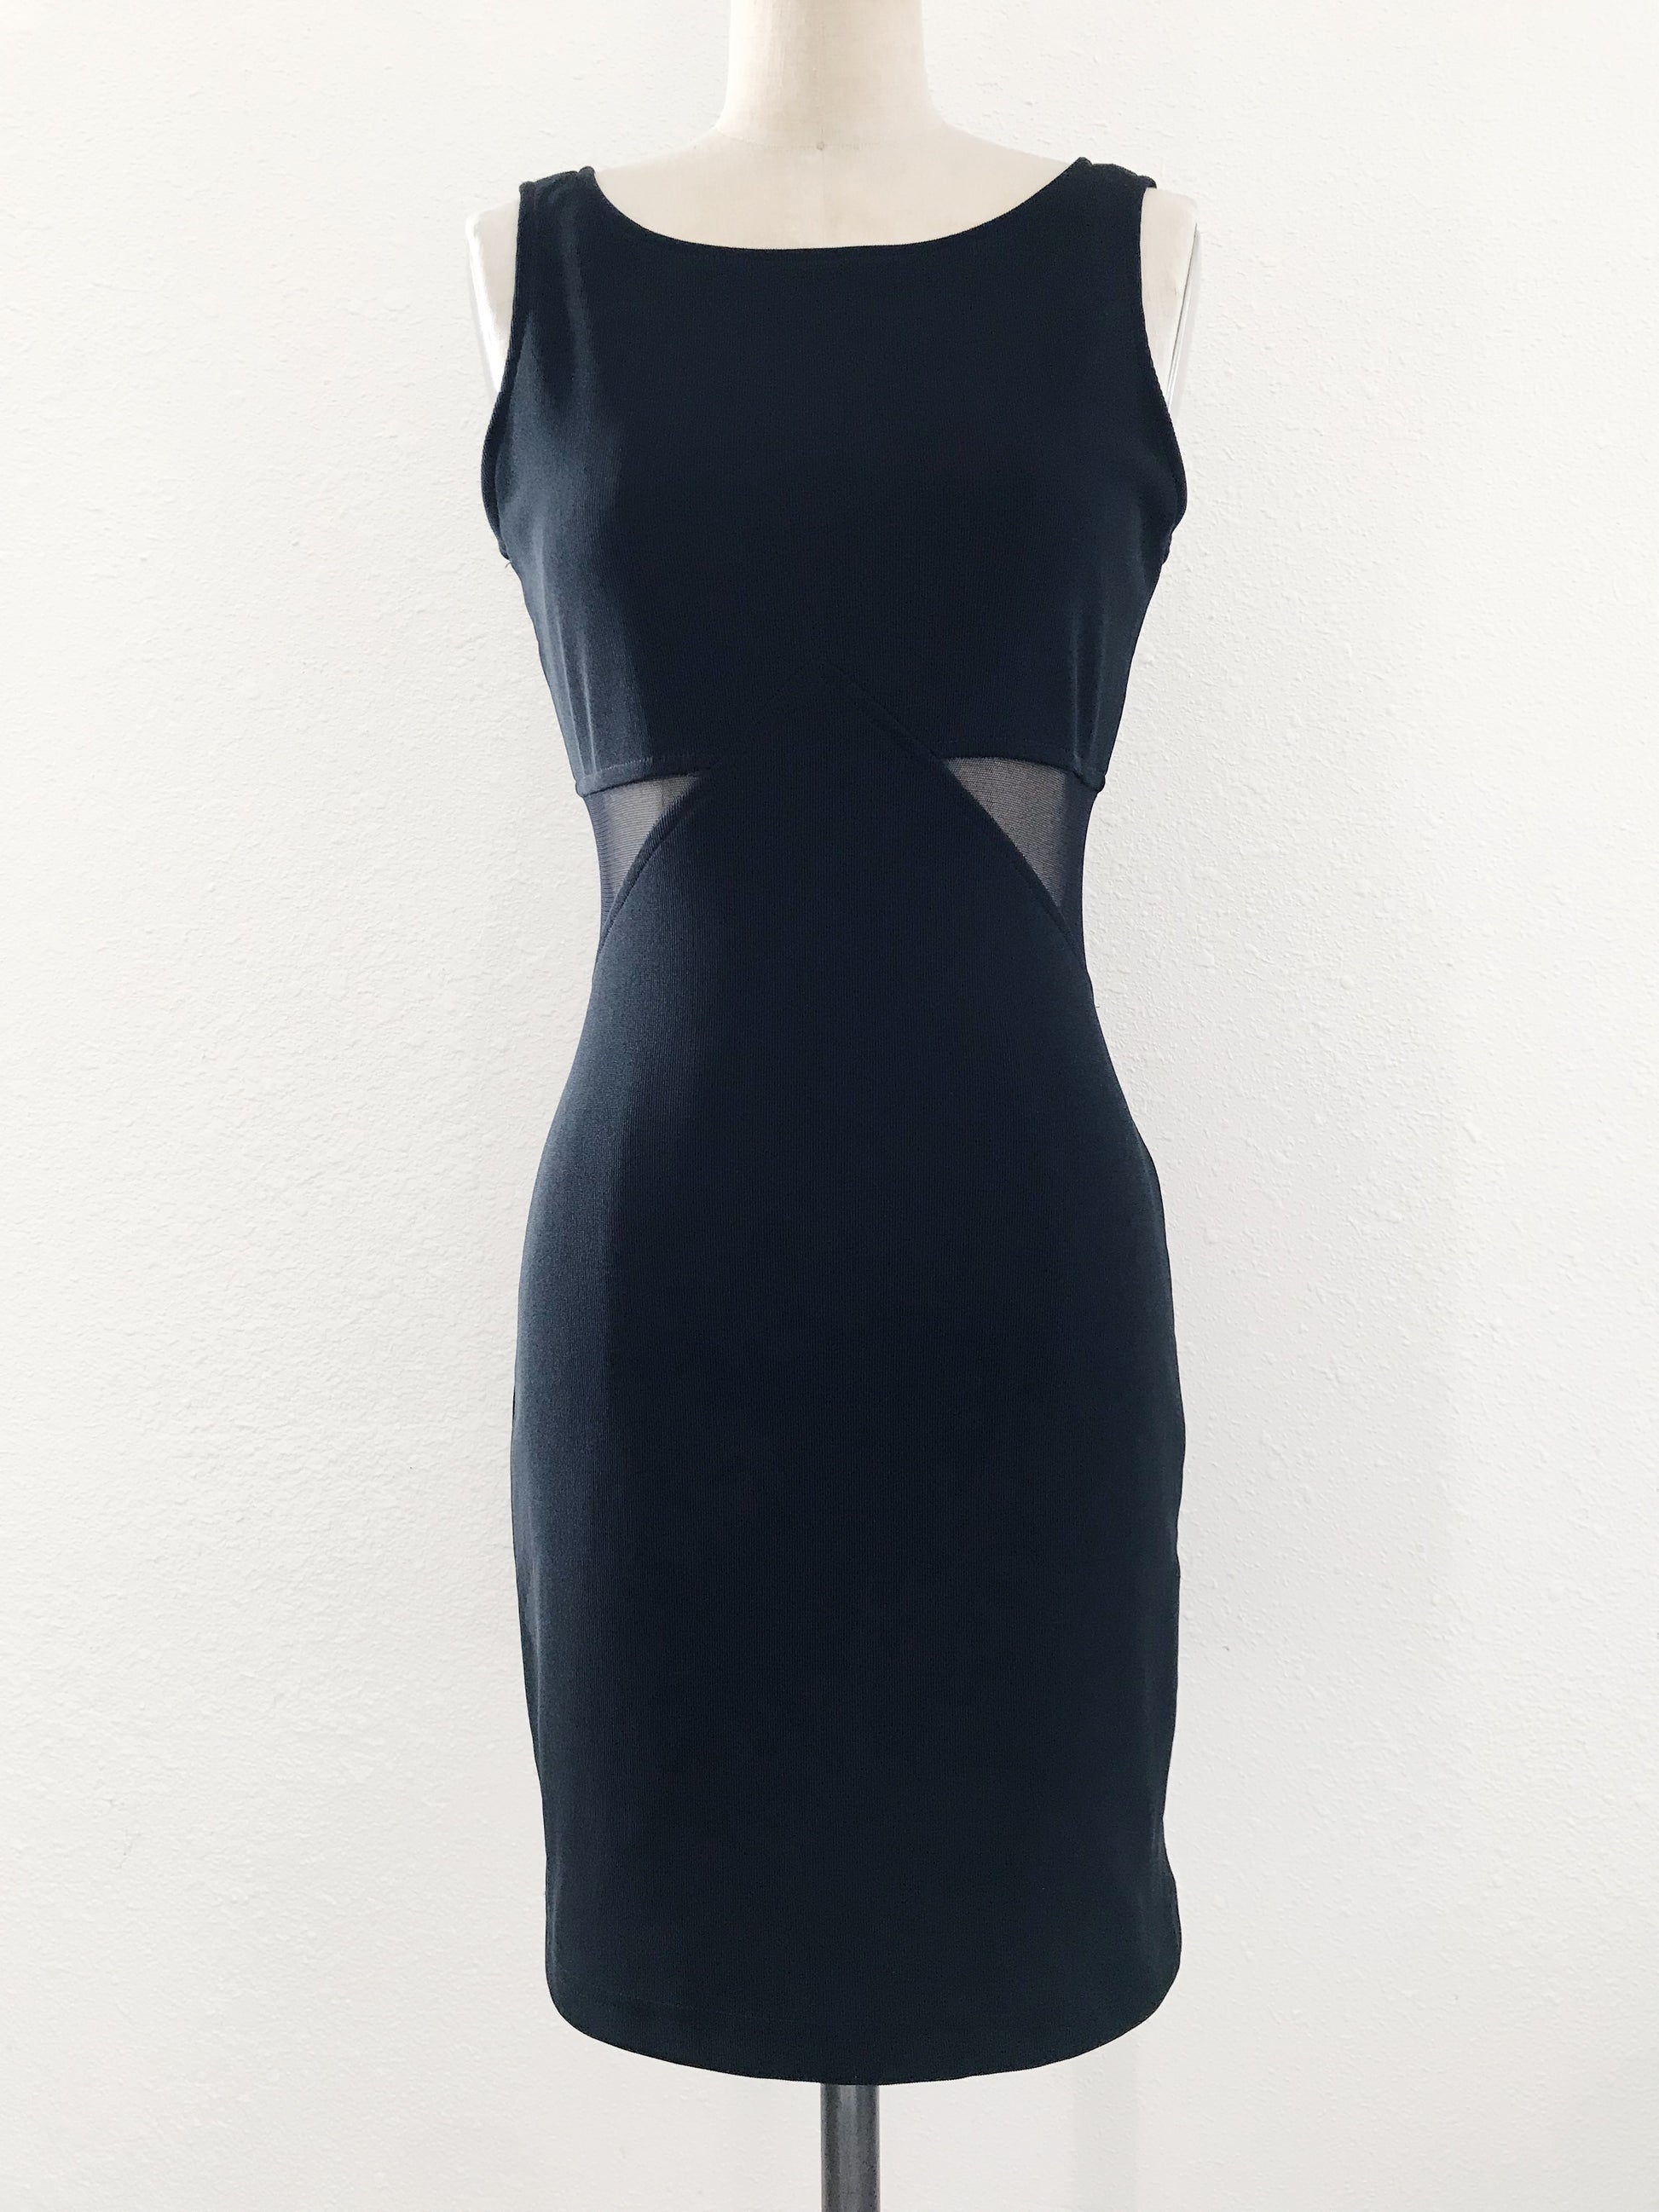 Prelovely | Vintage 1990s All That Jazz Black Mesh Cutout Mini Dress